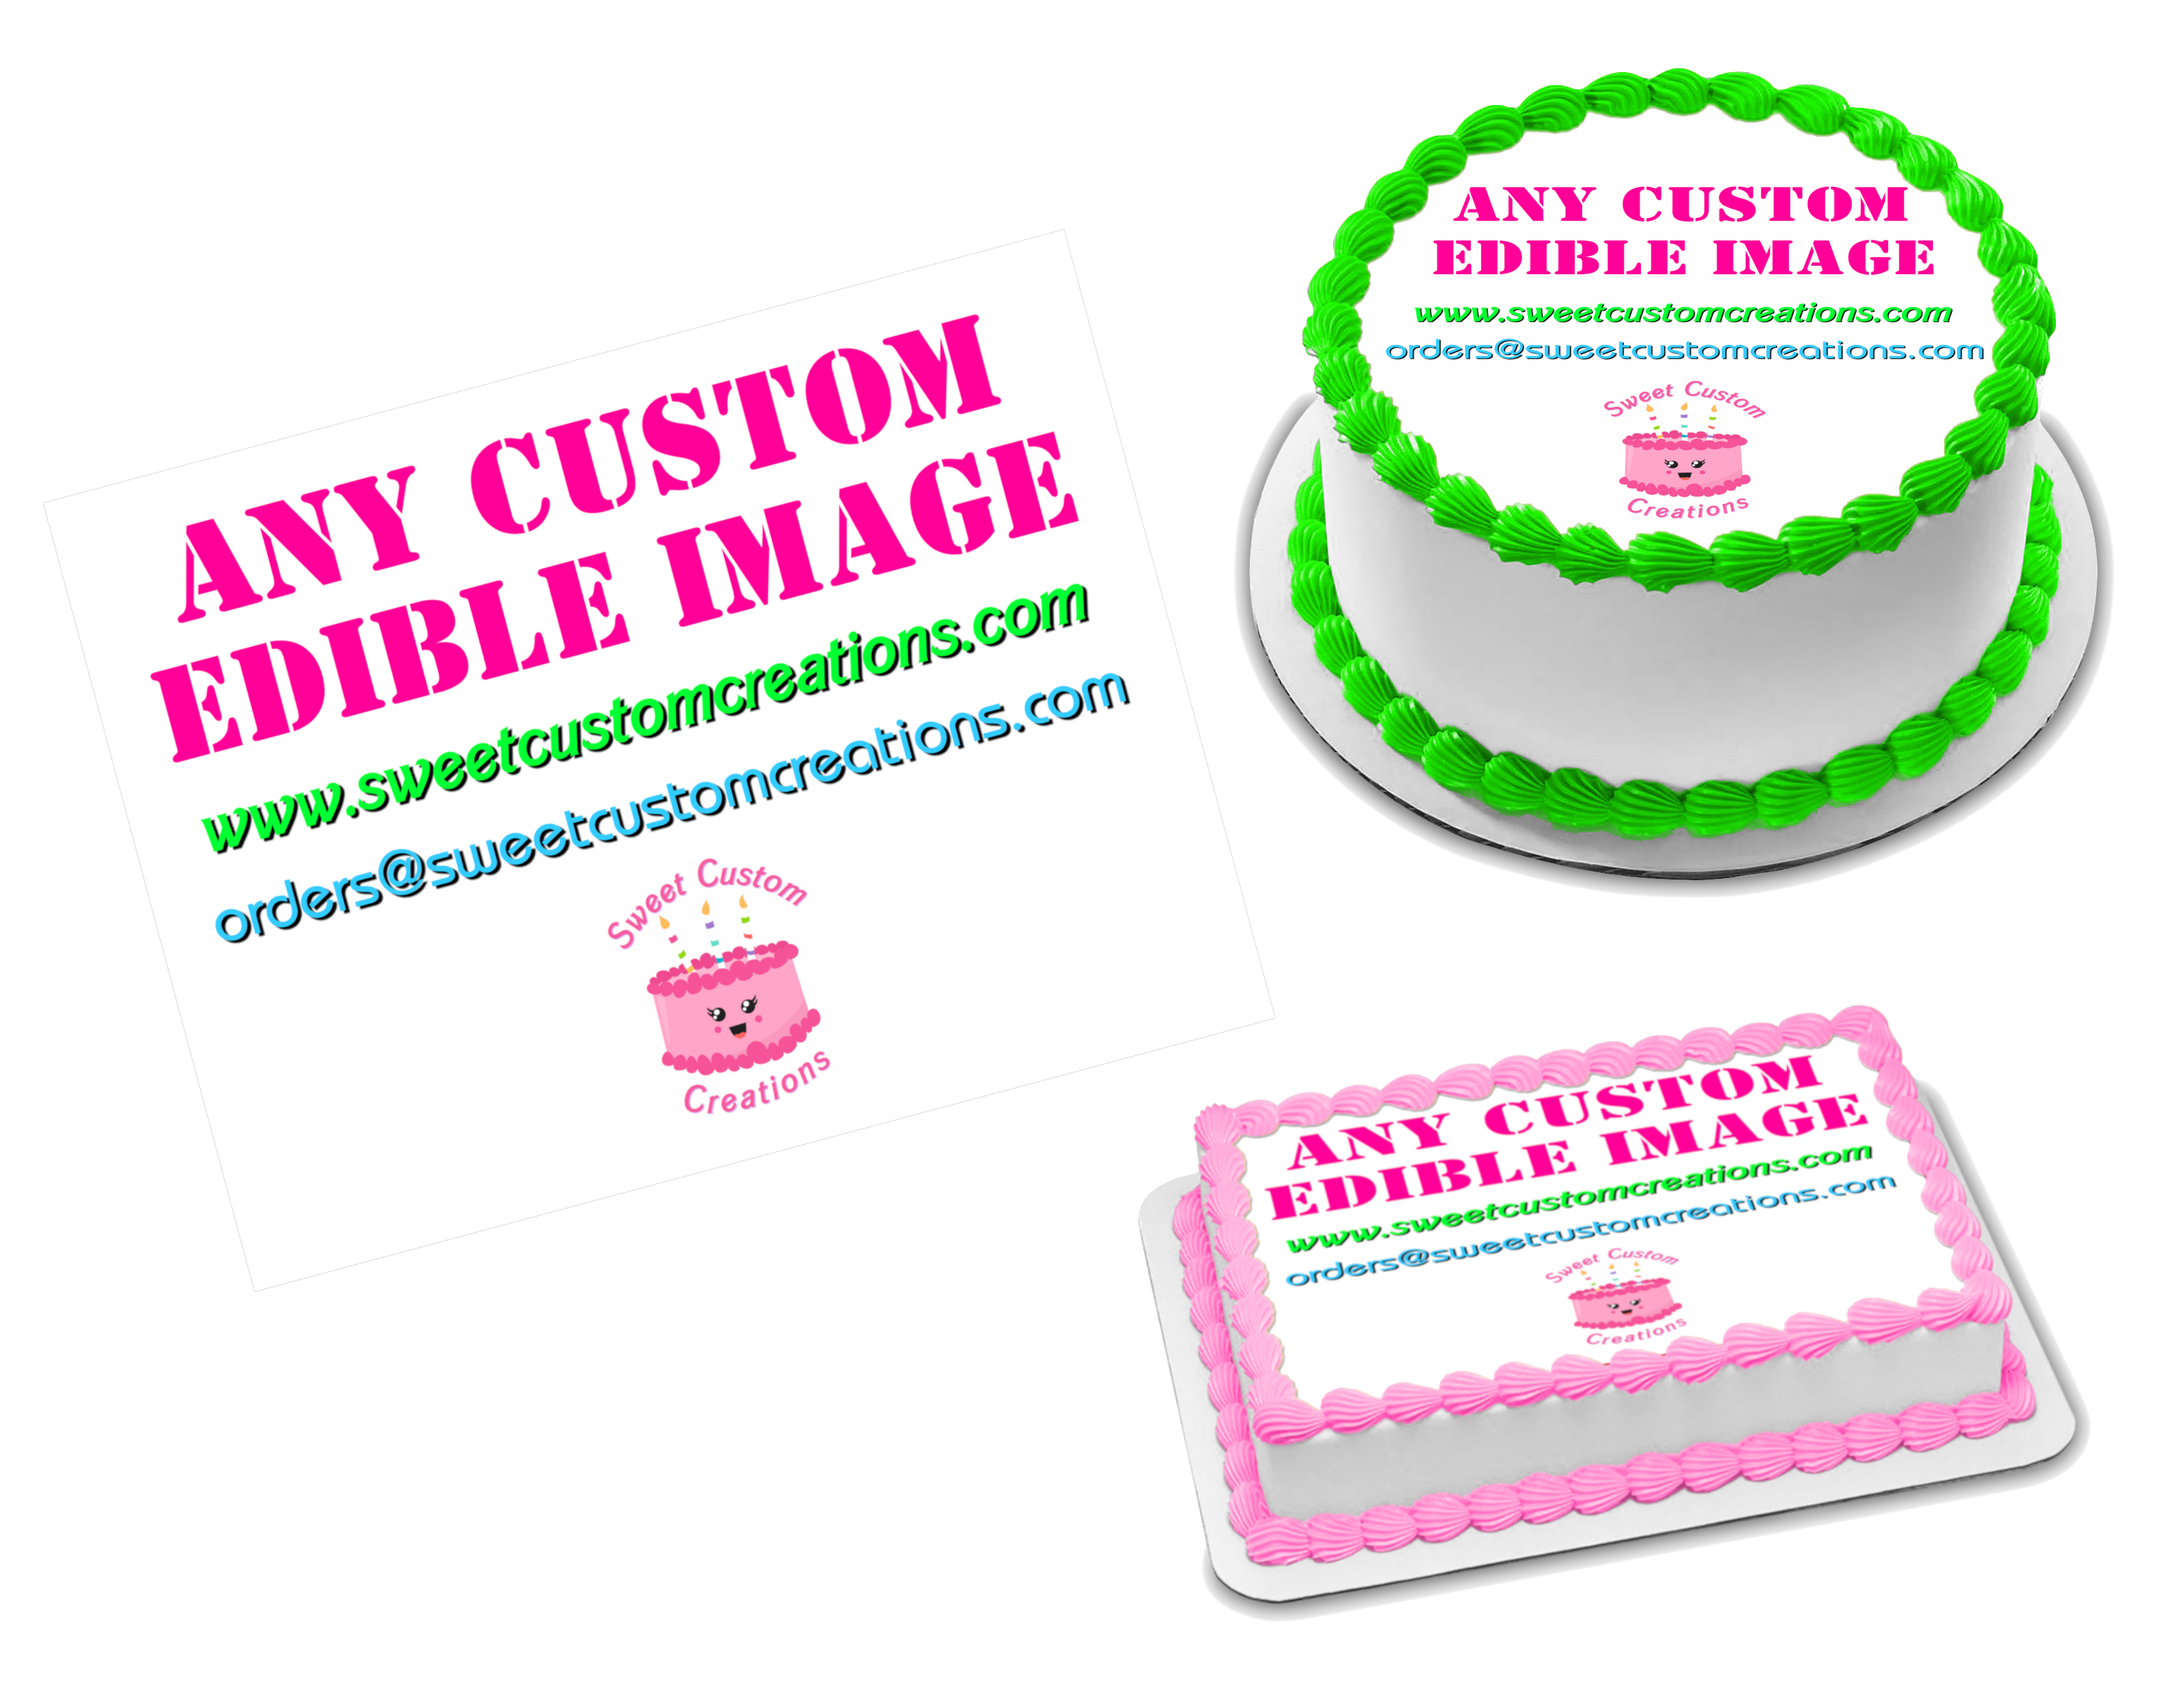 Custom Photo Edible Image Icing Frosting Sheet Cake Cupcake Cookie Top Sweet Custom Creations - roblox cake for girls buttercream